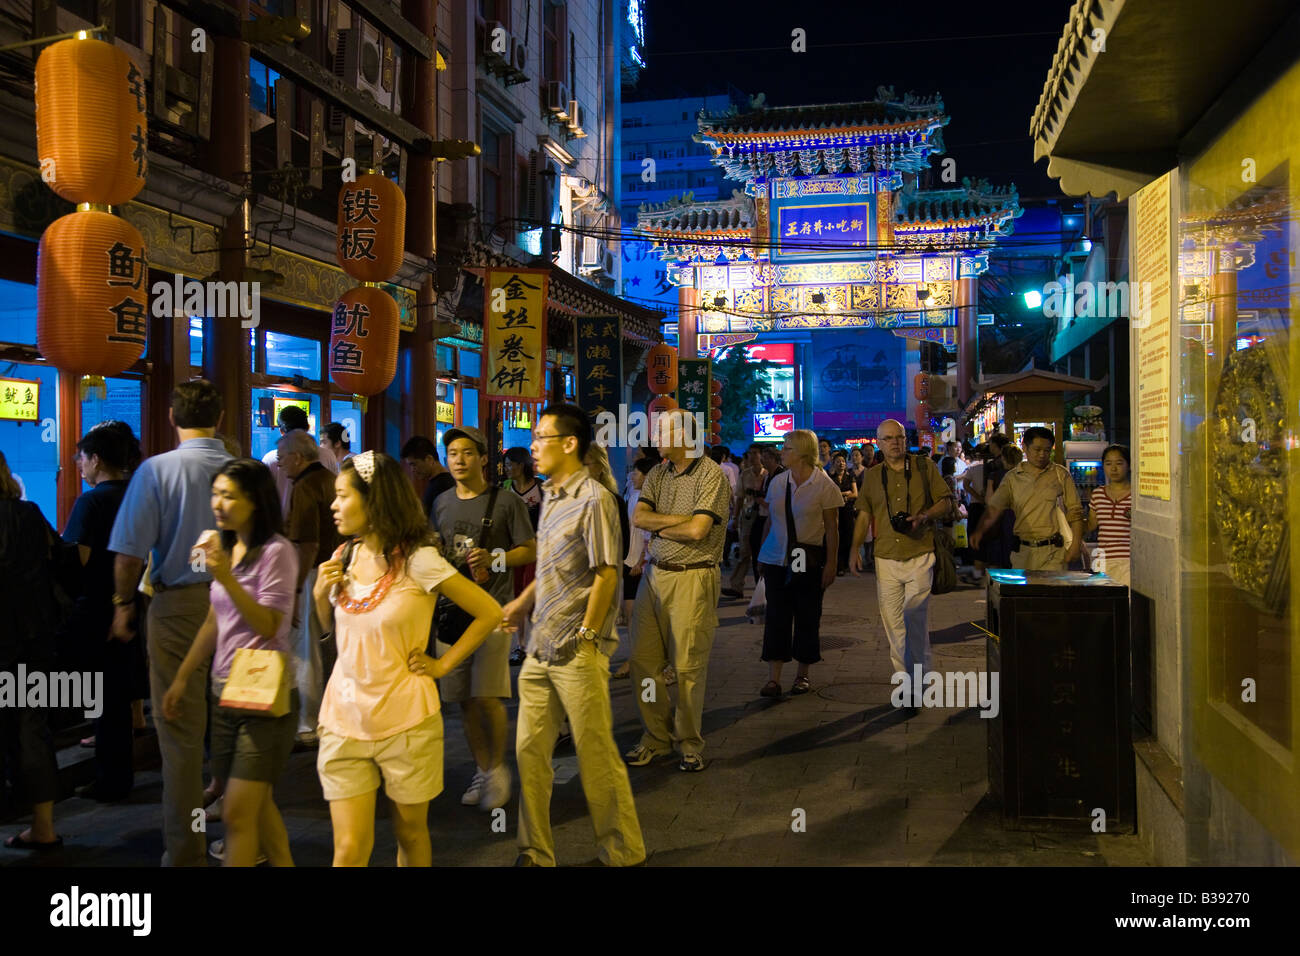 Chinese and foreigners mingle in Wanfujing Dajie Street Beijing's main shopping street at night JMH3189 Stock Photo